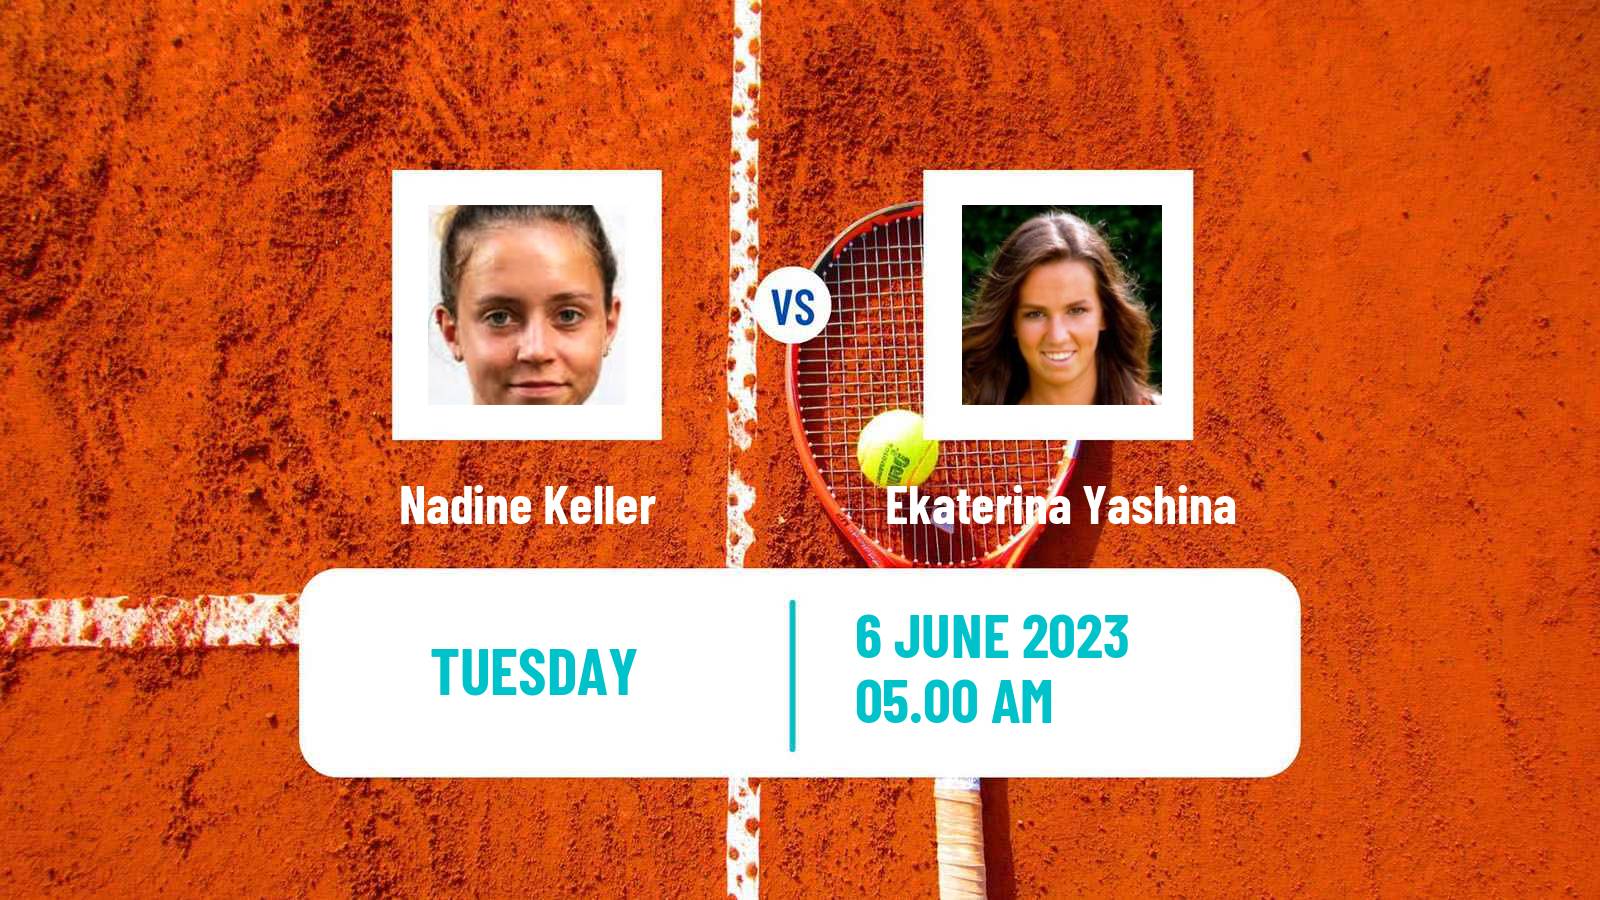 Tennis ITF W40 La Marsa Women Nadine Keller - Ekaterina Yashina